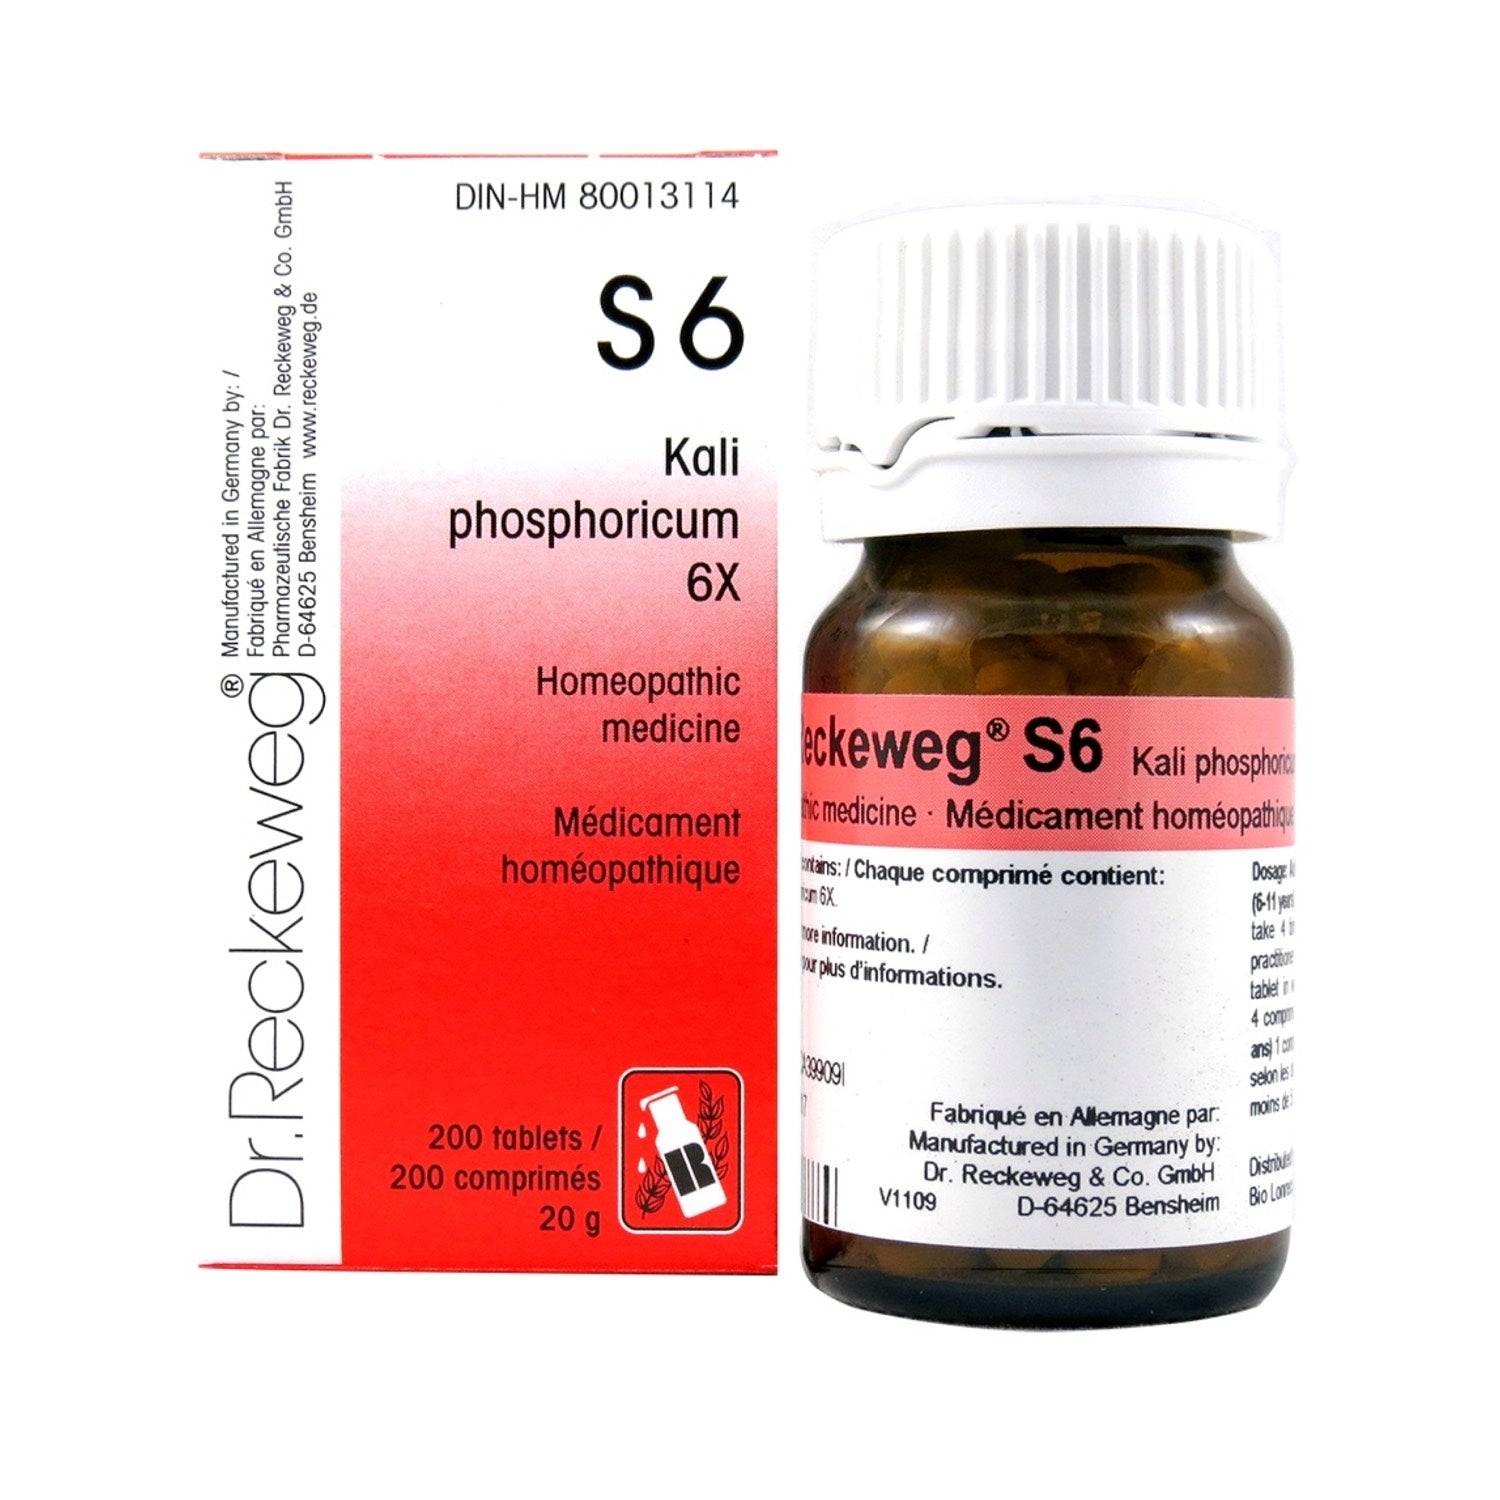 S6 Kali phosphoricum Homeopathic medicine Schuessler Salt 6X 200 tablets (20 g) - iwellnessbox